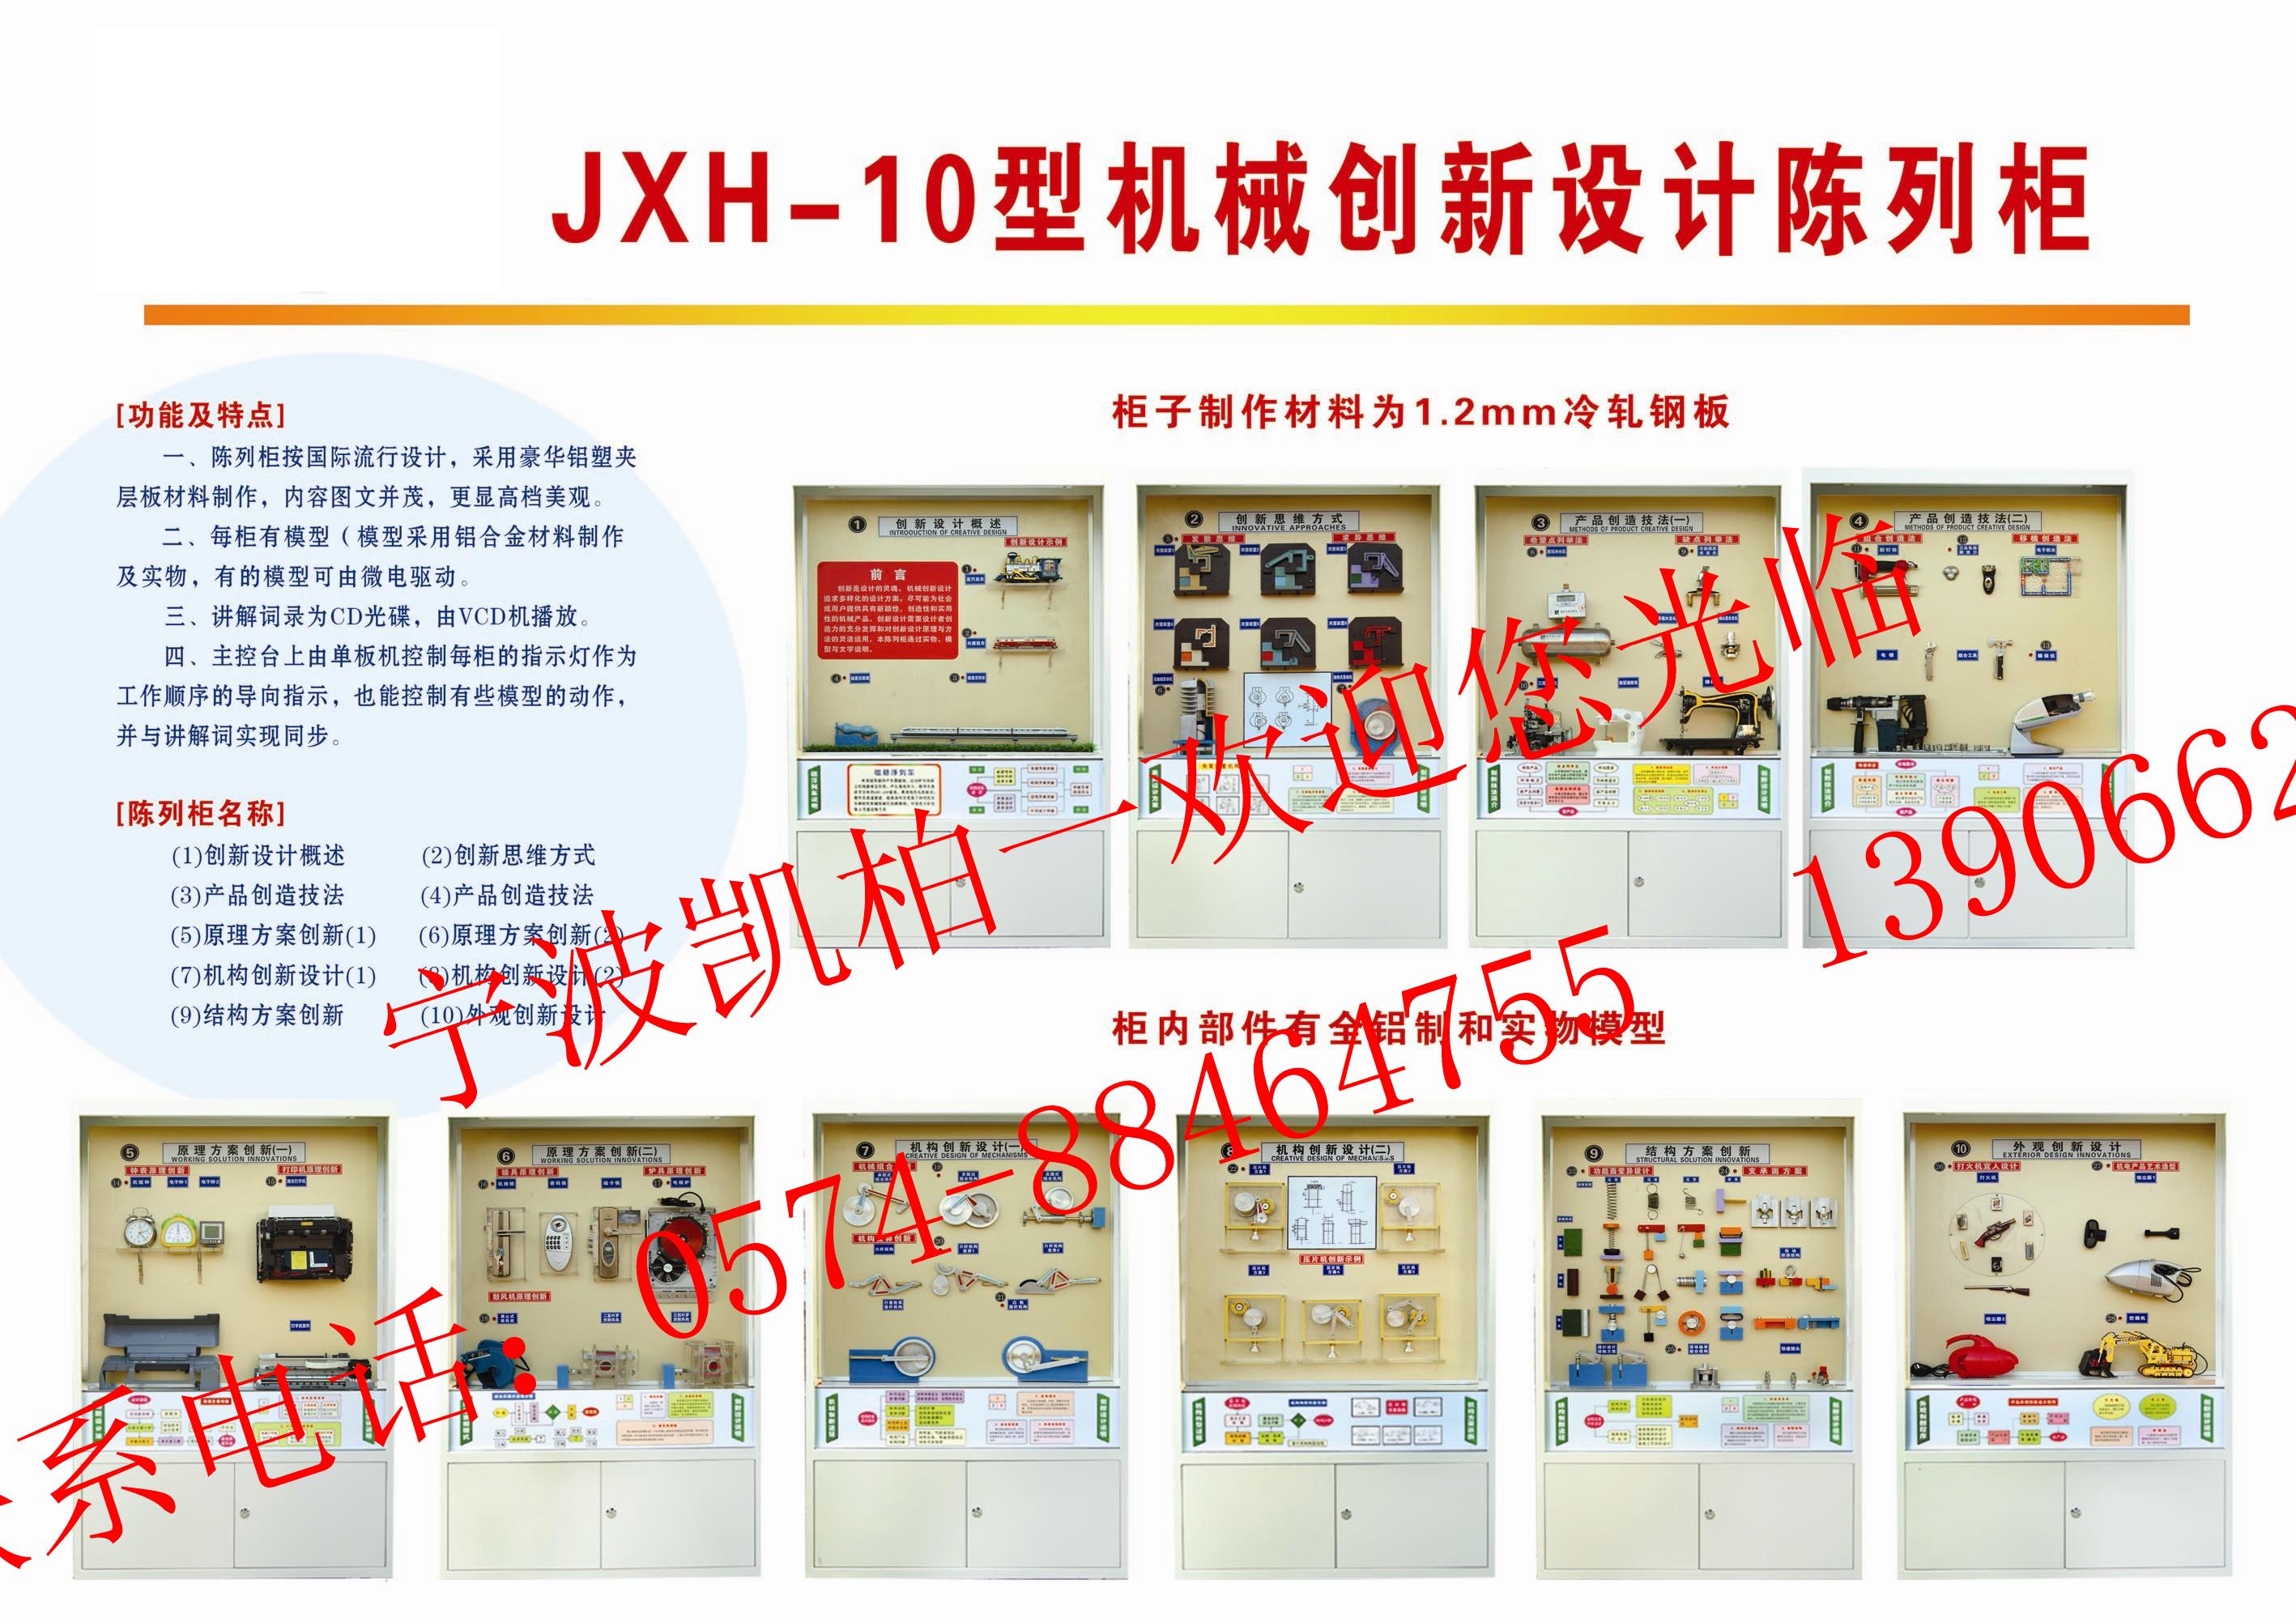 JXH-10B型机械创新设计陈列柜